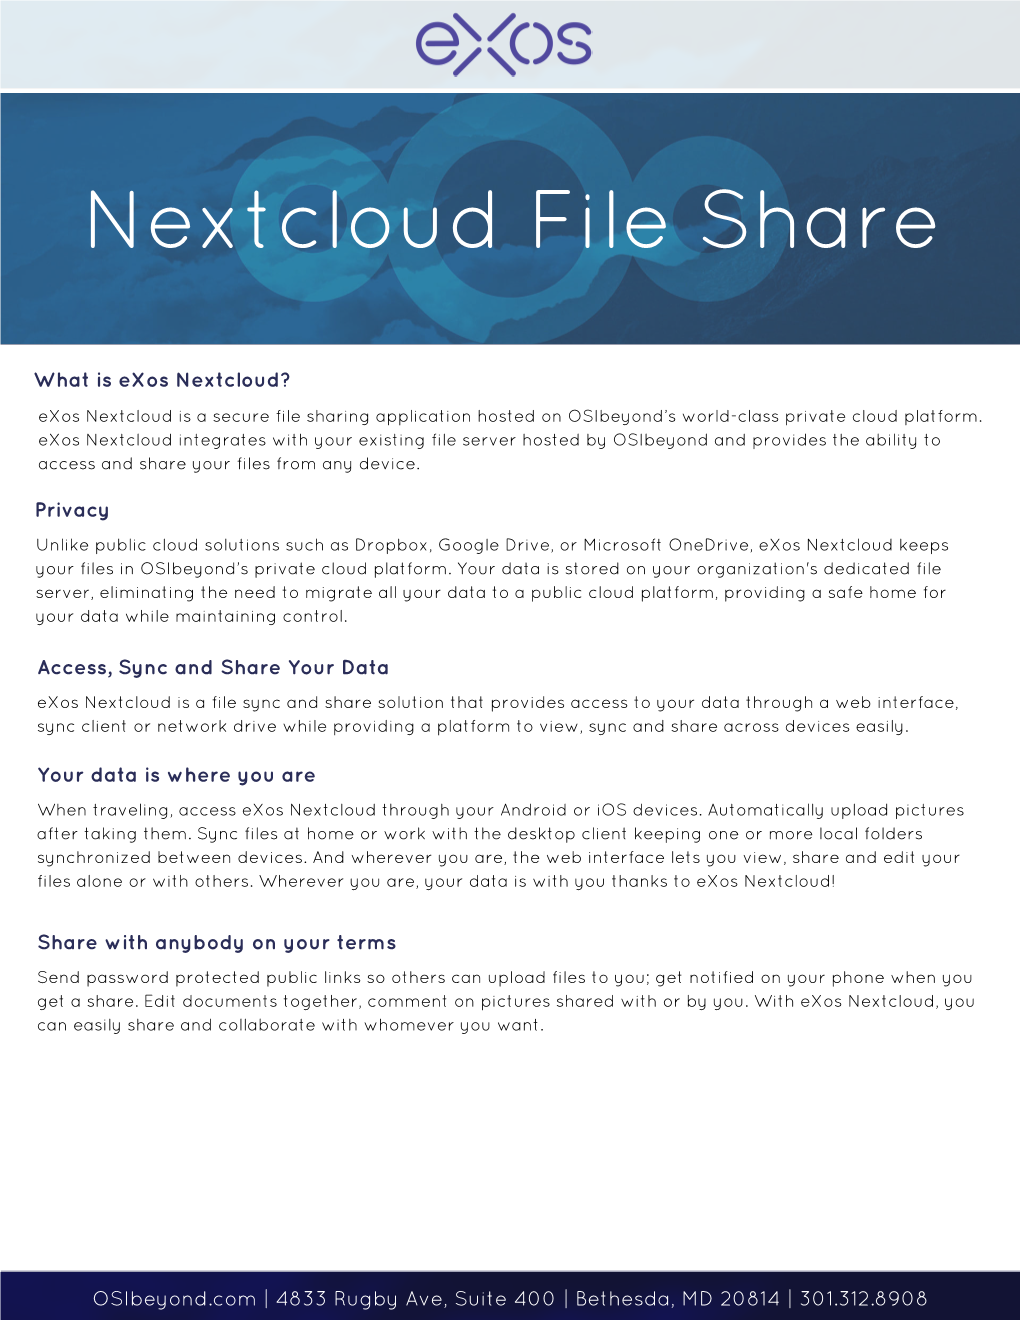 Exos Nextcloud File Share